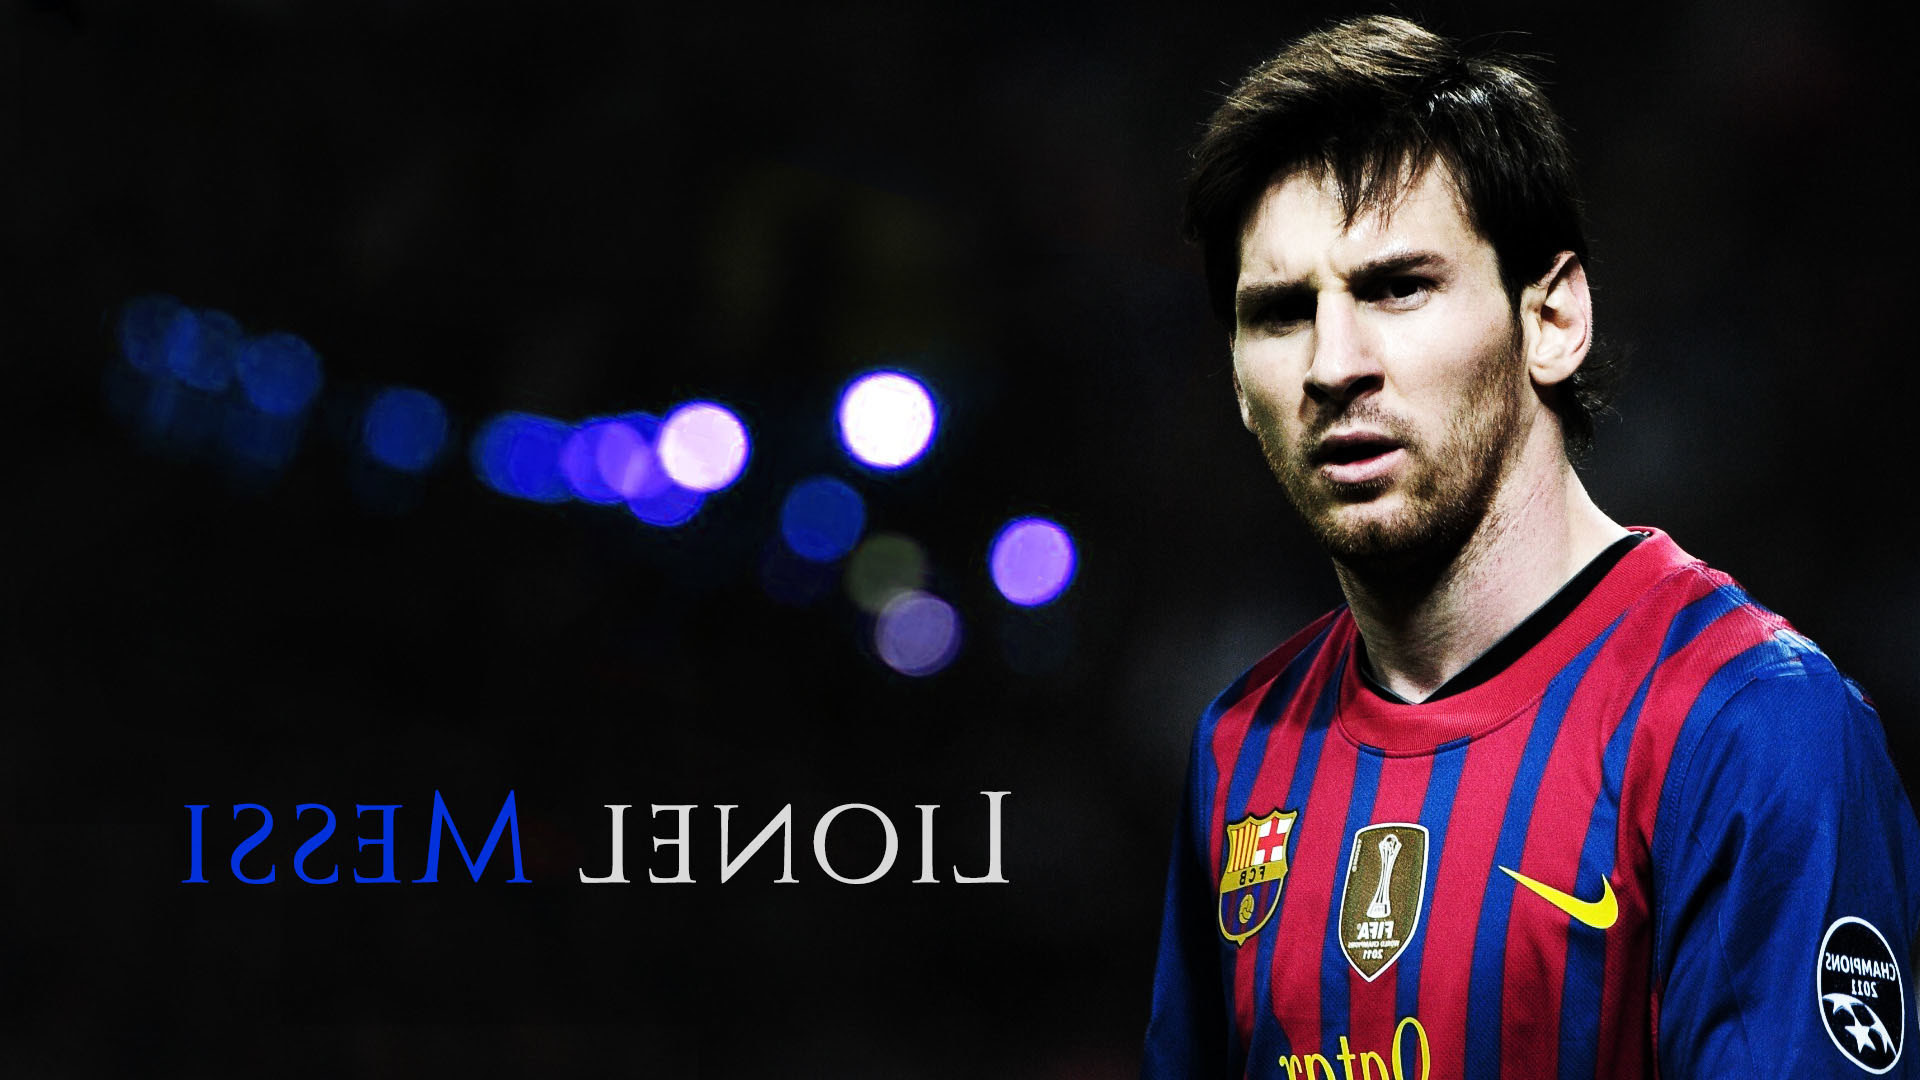 1920x1080 ... Lionel Messi Wallpaper HD Download - Free download latest Lionel .